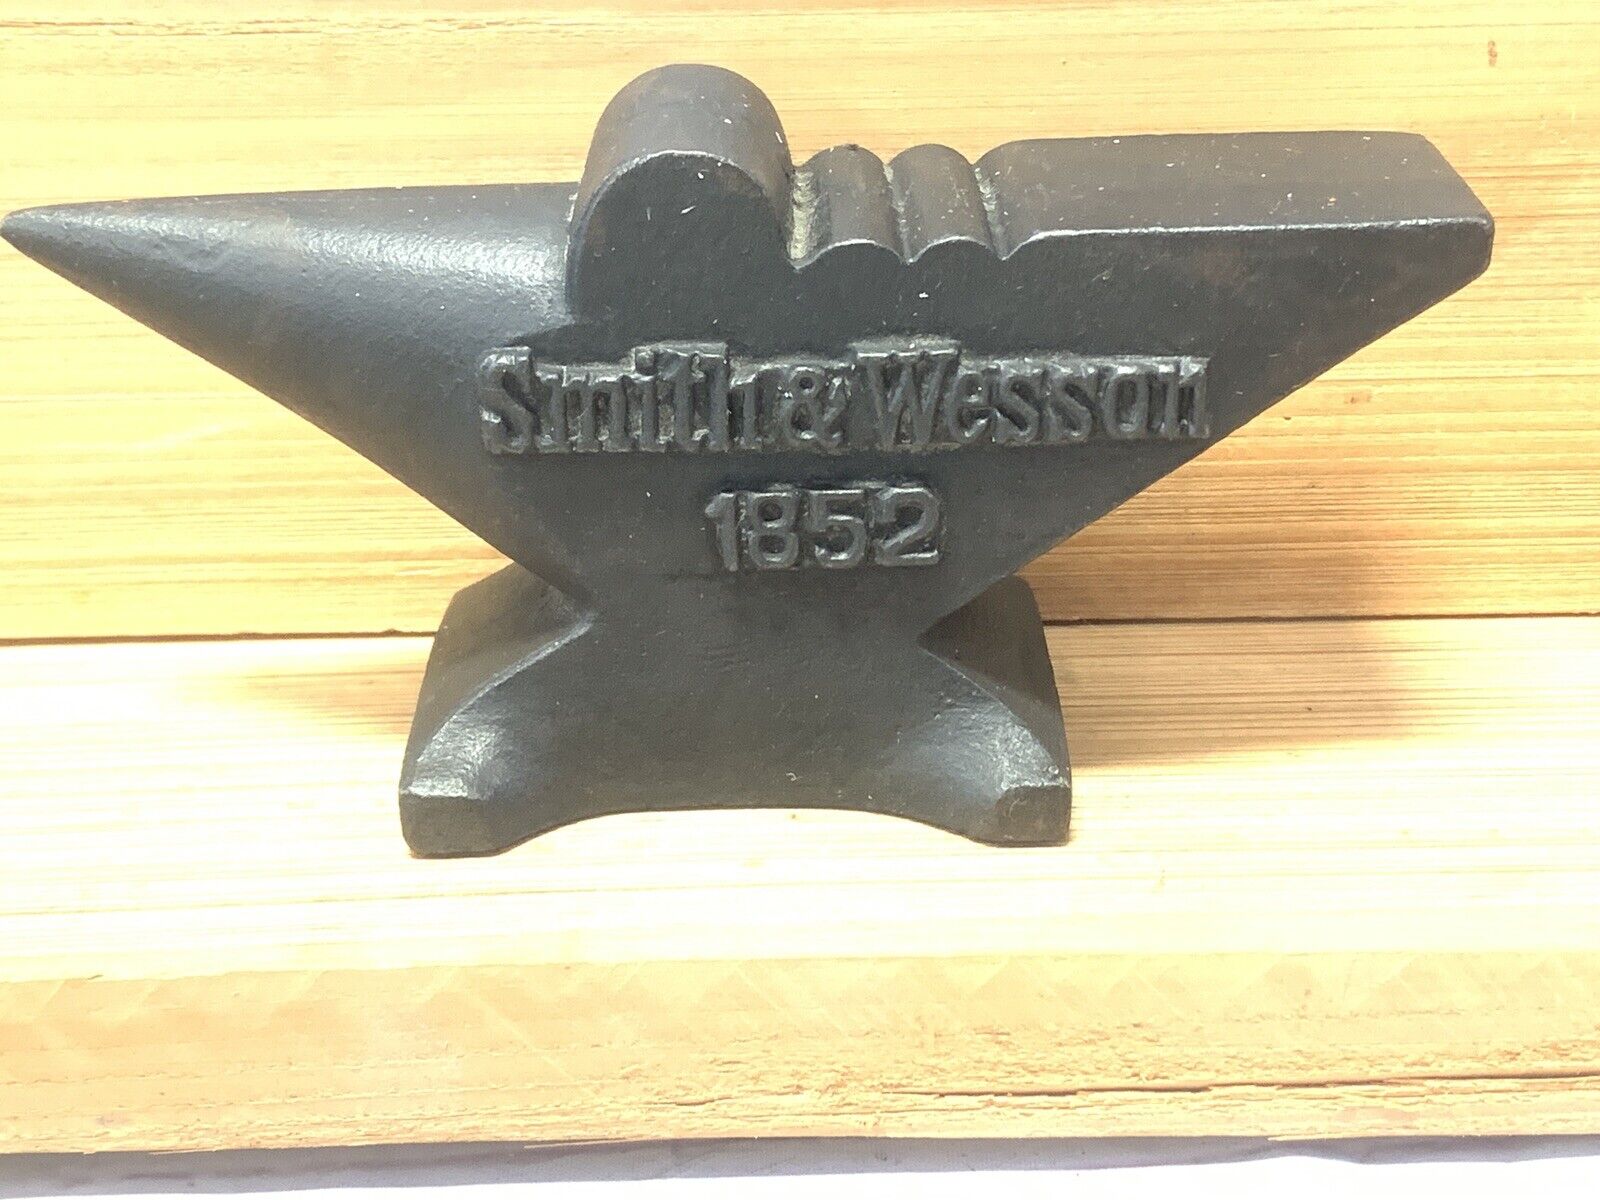 Smith & Wesson 1852 Cast Iron Anvil Salesman Sample Man Cave Decor Gunsmith Gift